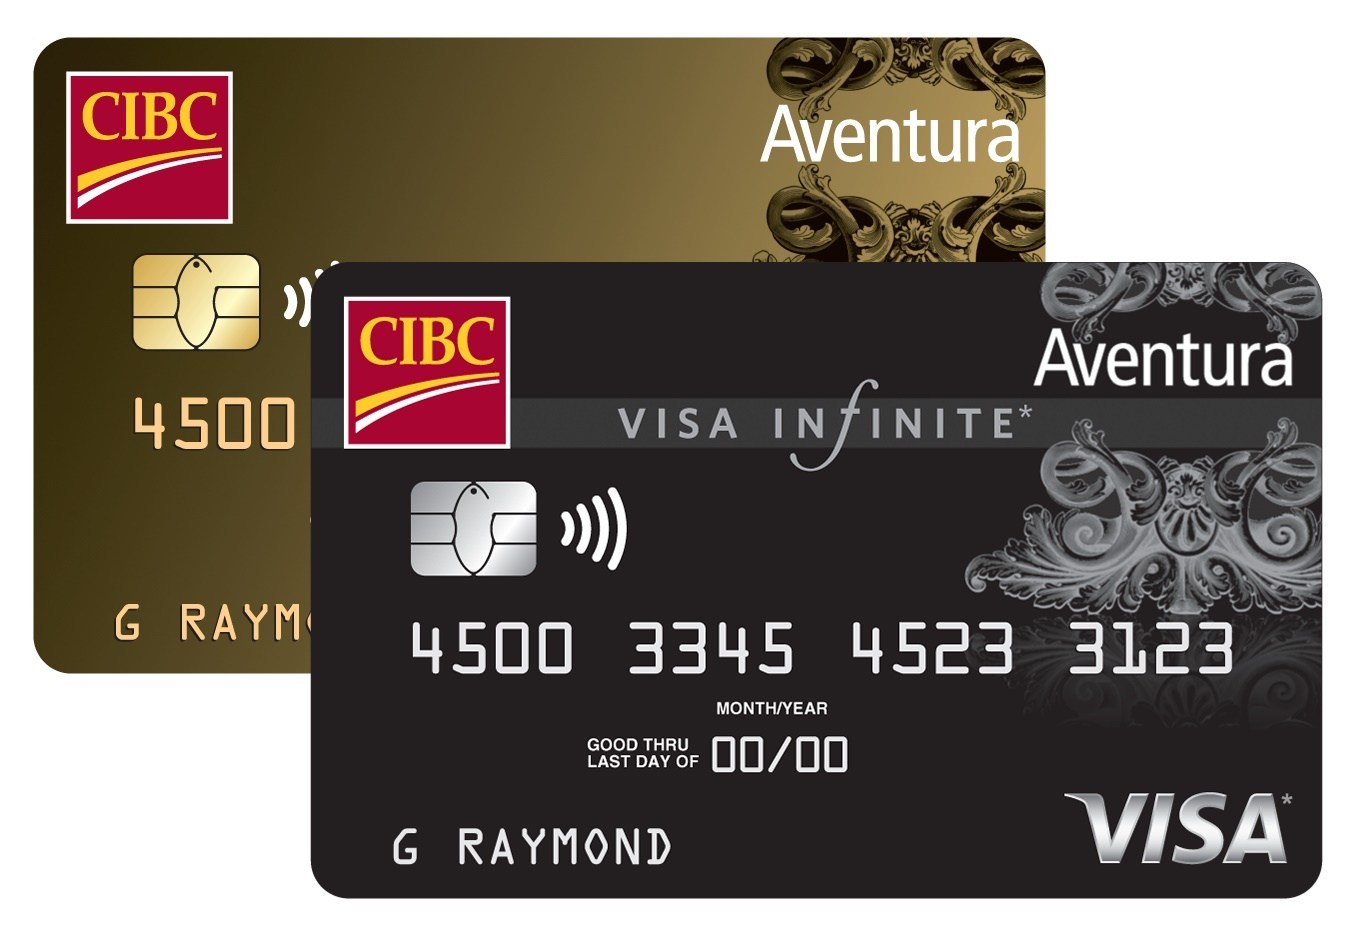 cibc-adding-new-features-to-its-premium-aventura-cards-sep-21-2018